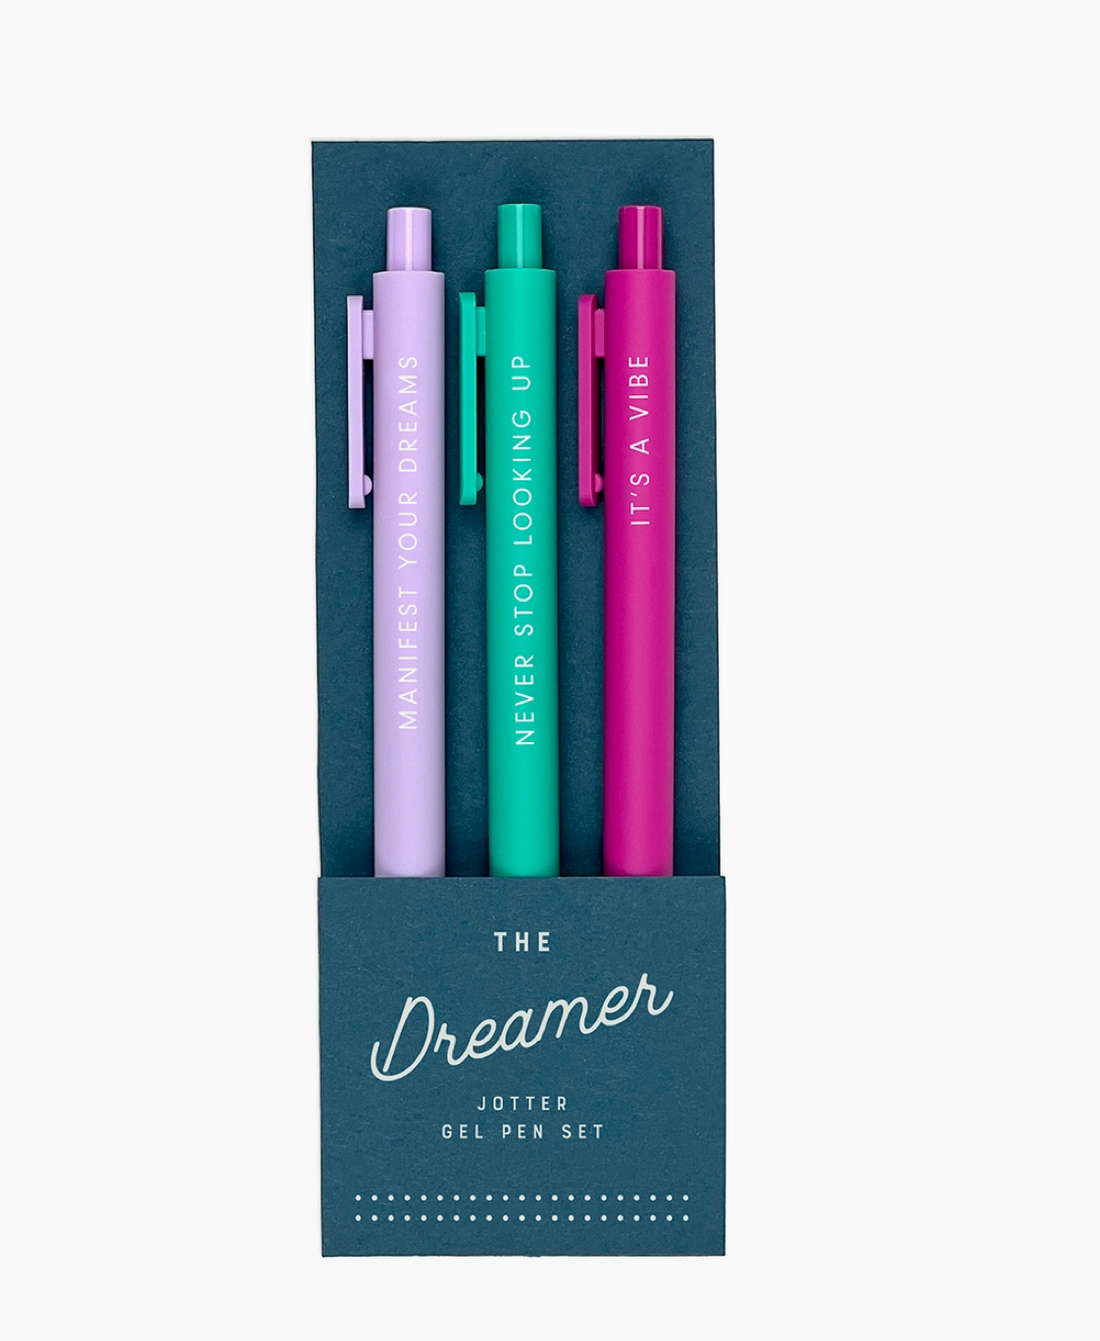 The Dreamer Jotter Gel Pen Set